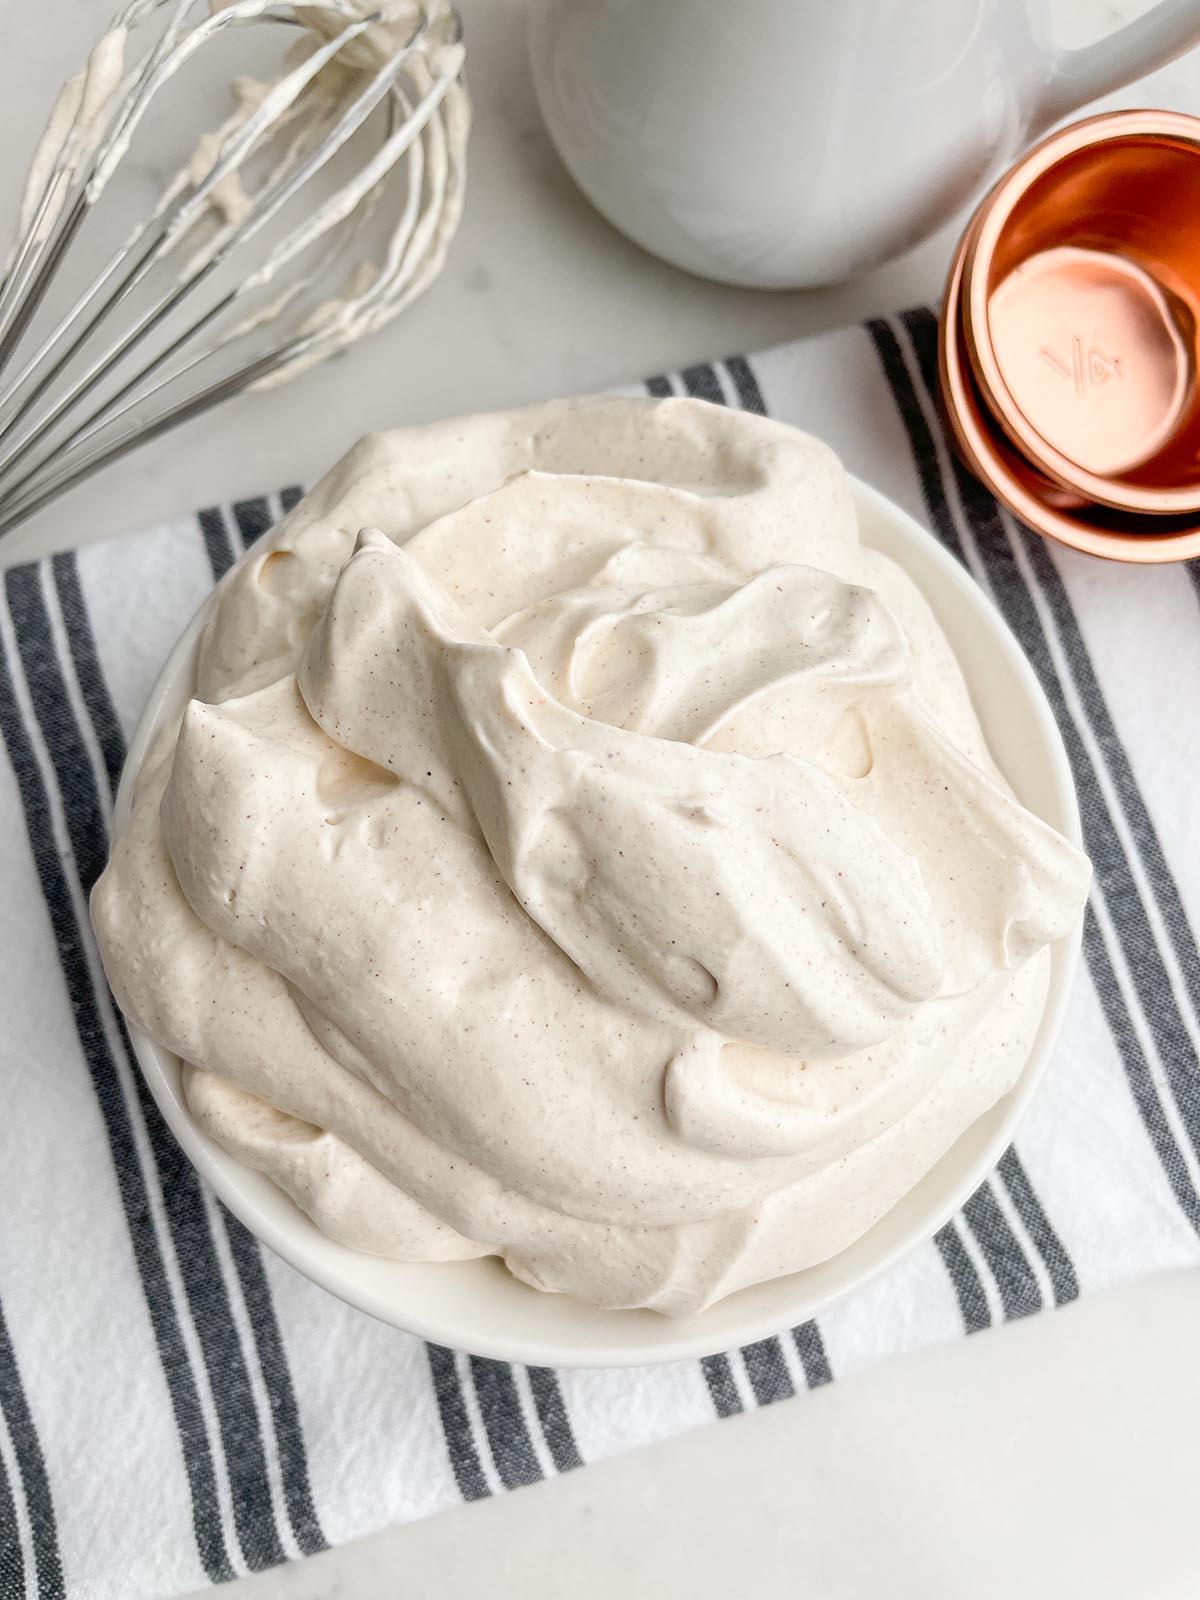 cinnamon whipped cream in a white bowl.